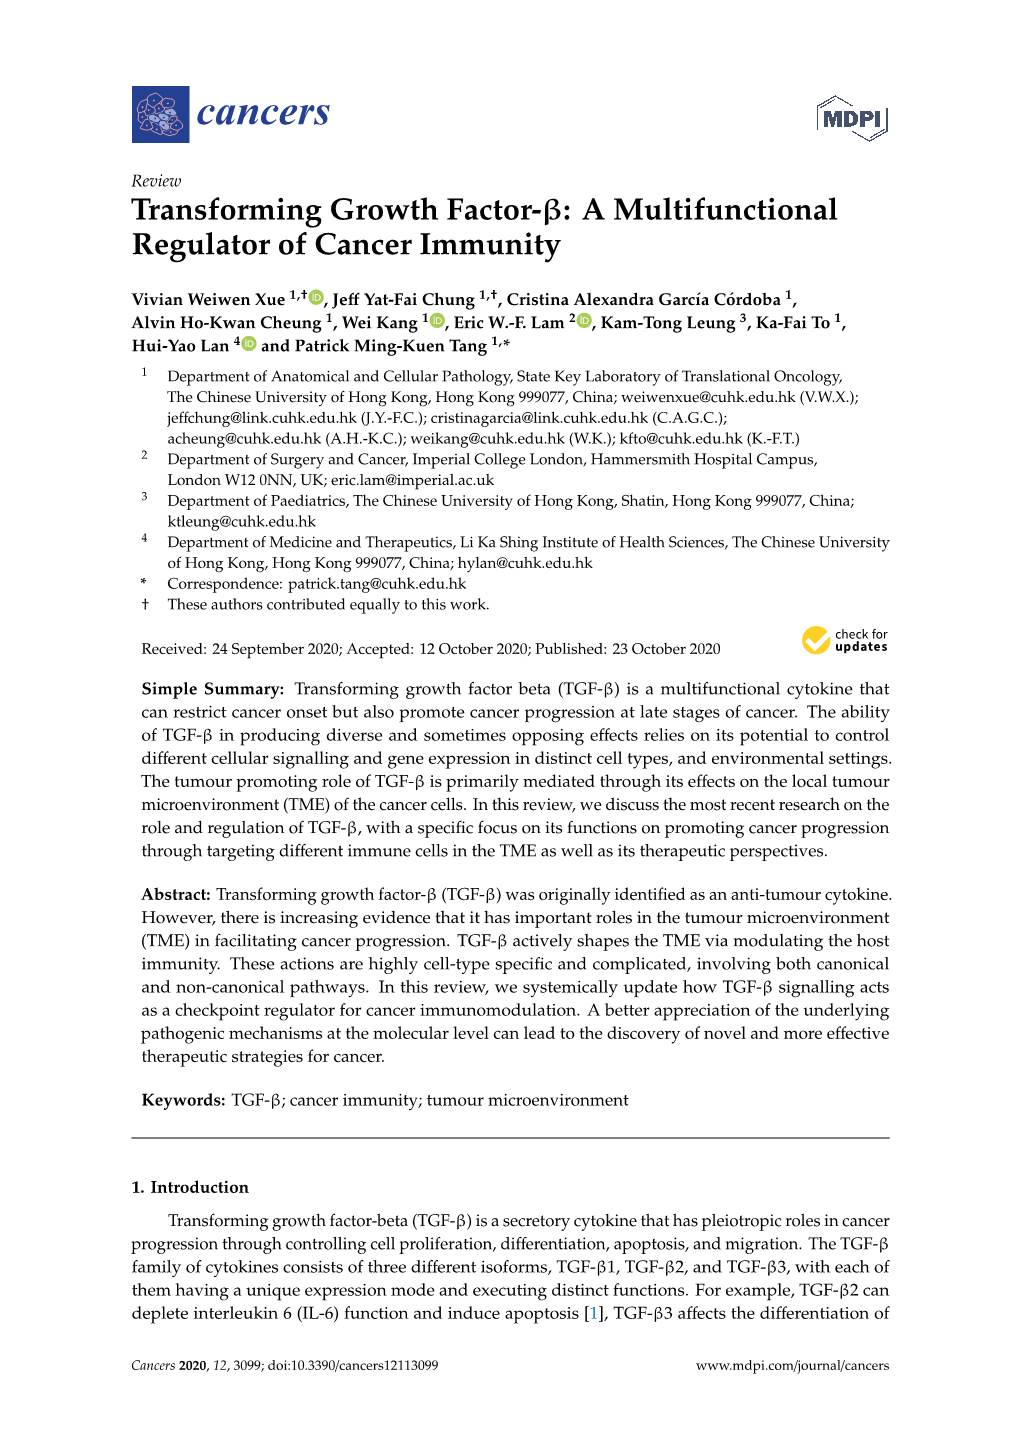 Transforming Growth Factor-Β: a Multifunctional Regulator of Cancer Immunity